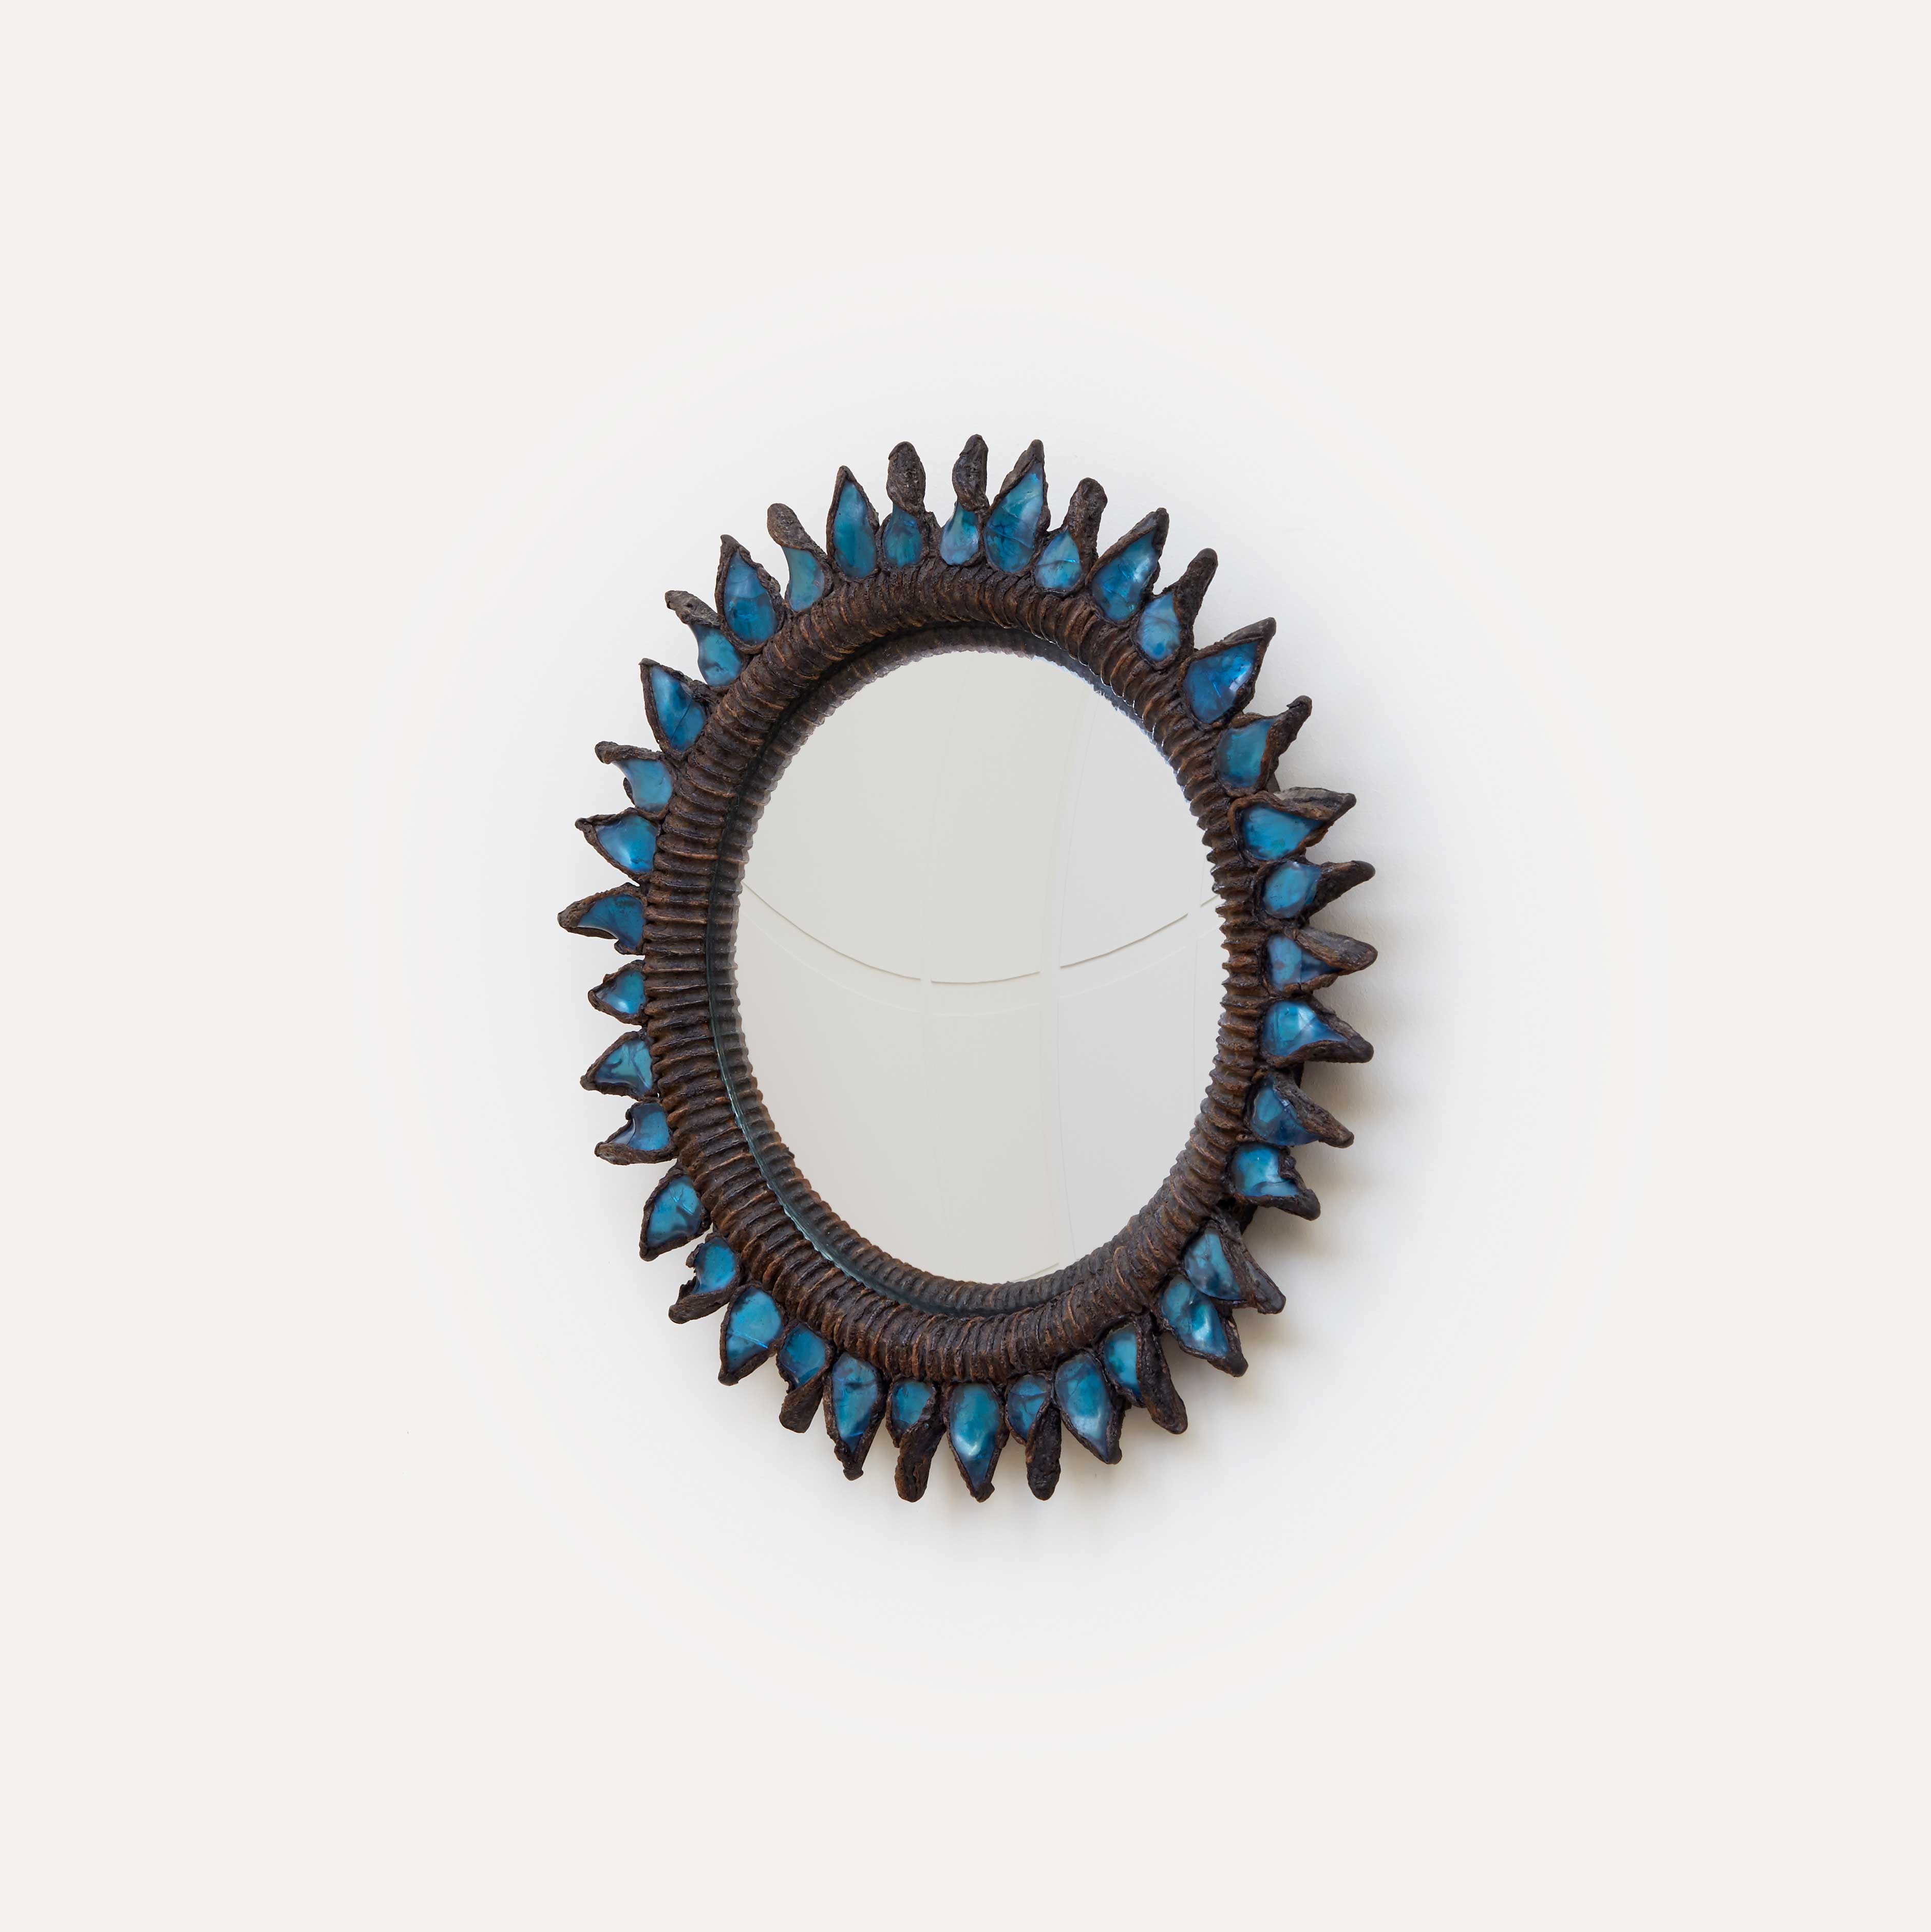 Line Vautrin, Blue “Chardon” mirror, vue 01